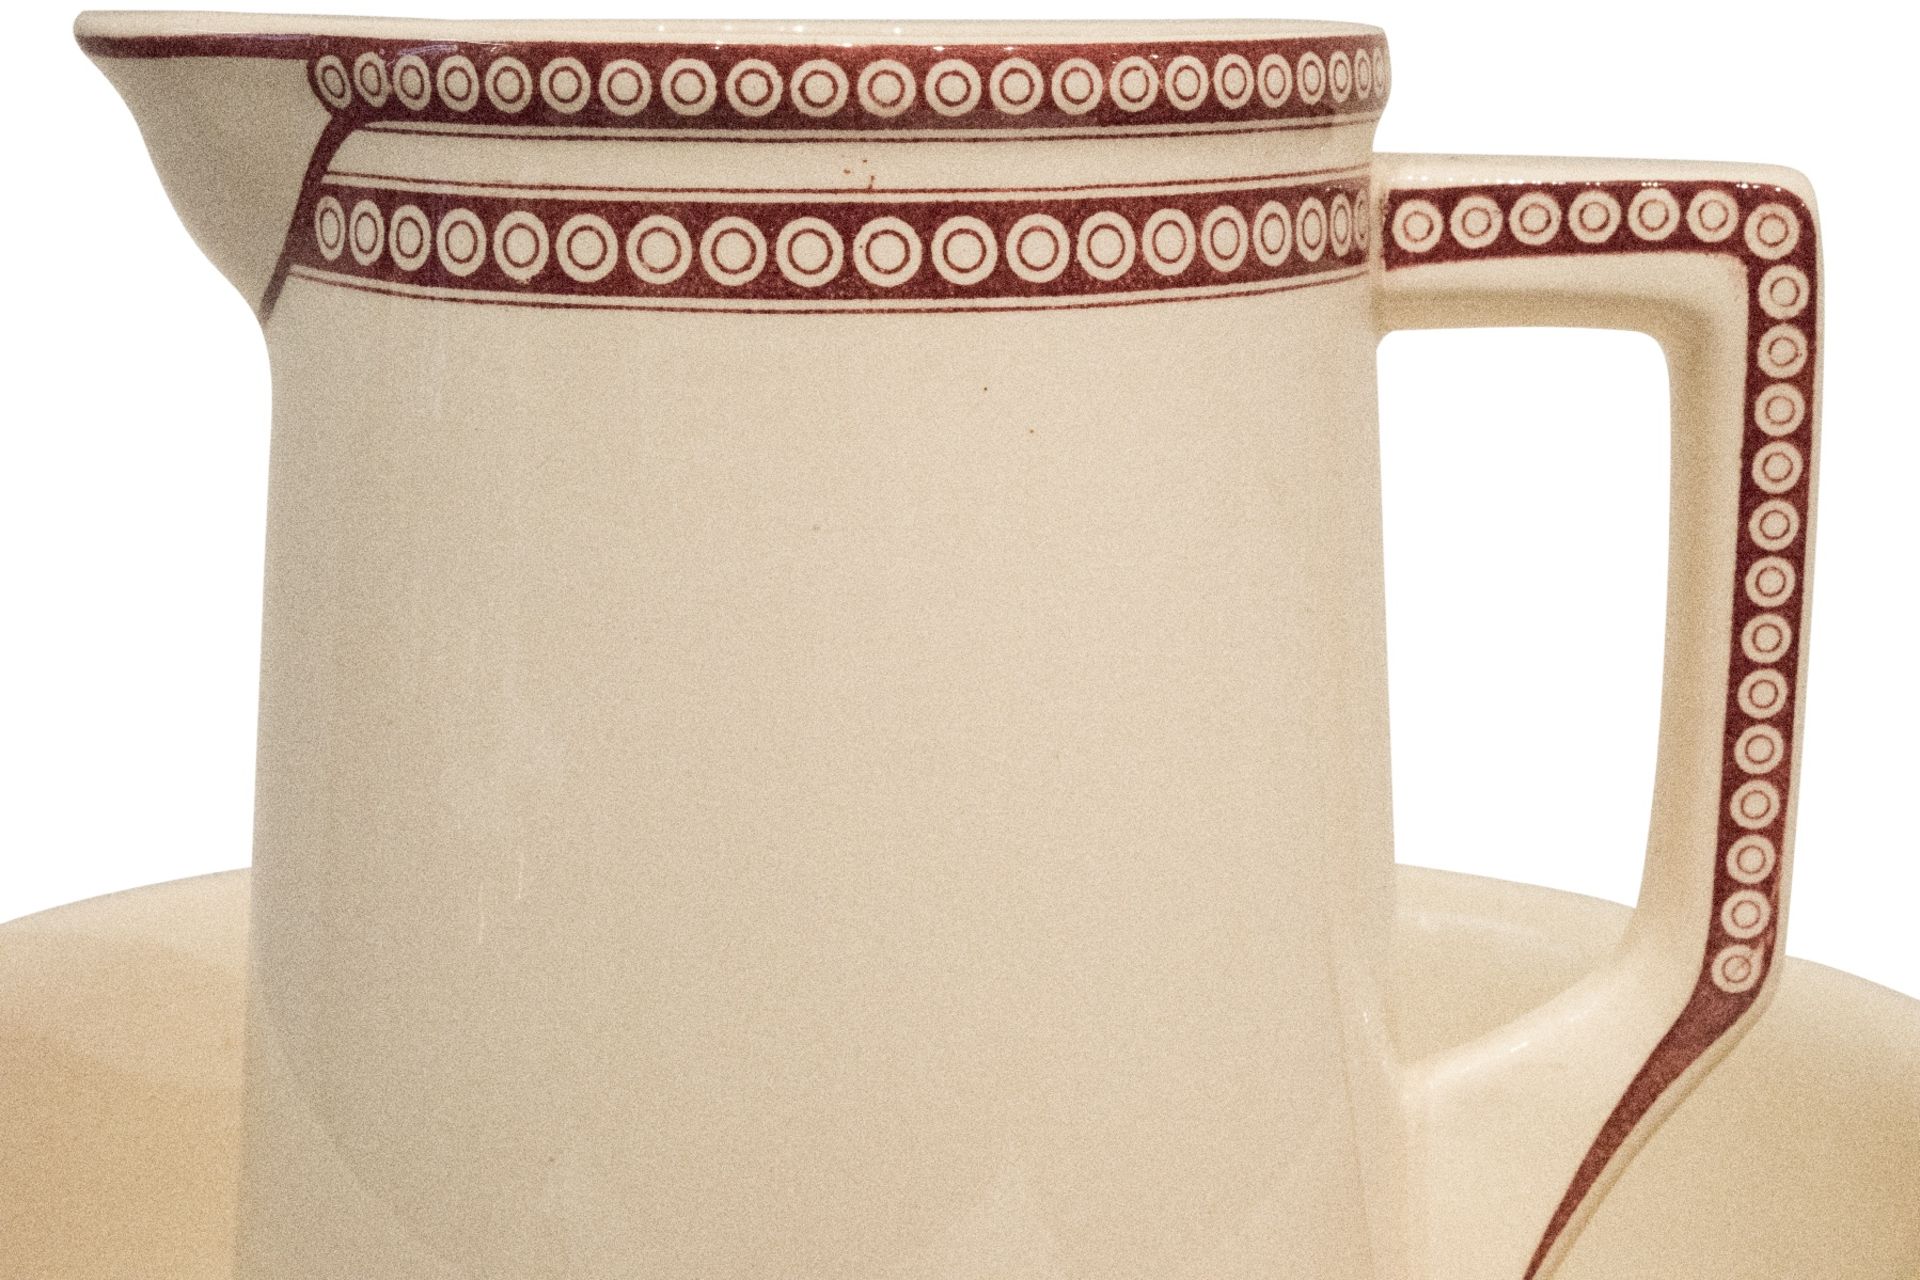 Villeroy & Boch Anitkes Wasch Set Keramik | Villeroy & Boch Anitkes Wash Set Ceramic - Image 5 of 5